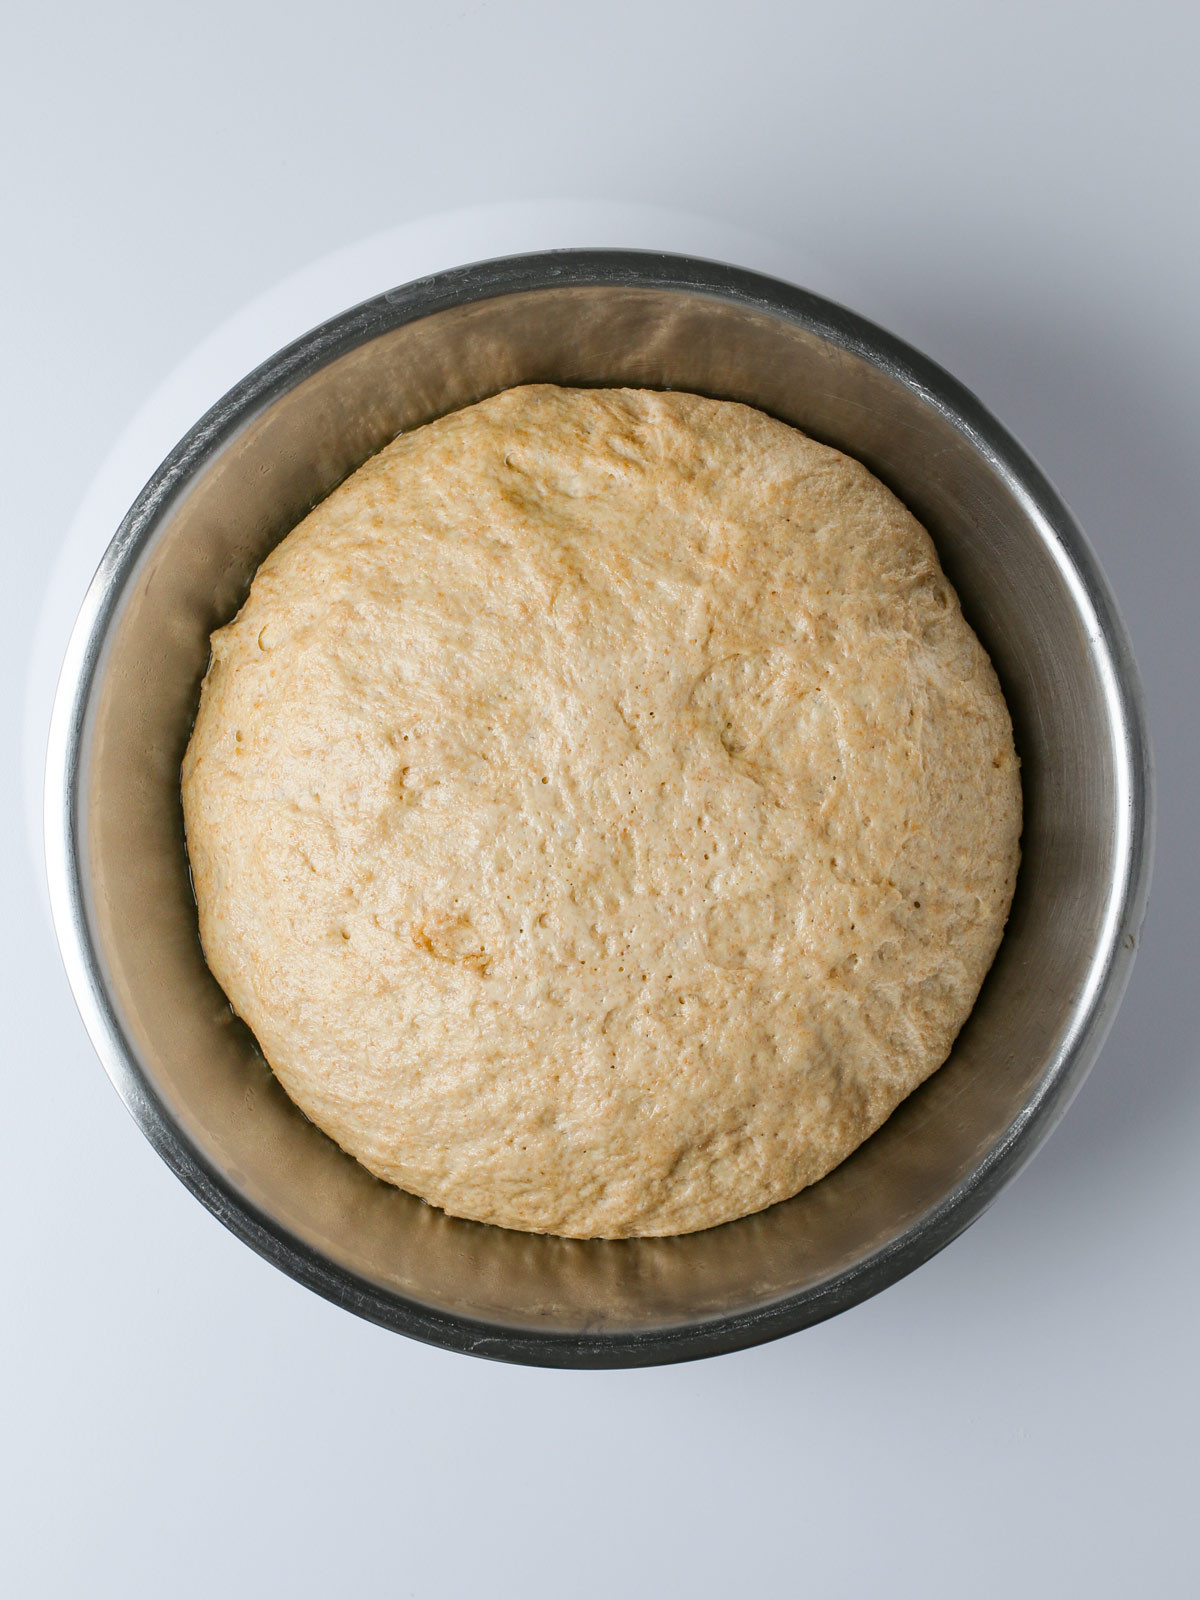 risen dough ball in mixing bowl.